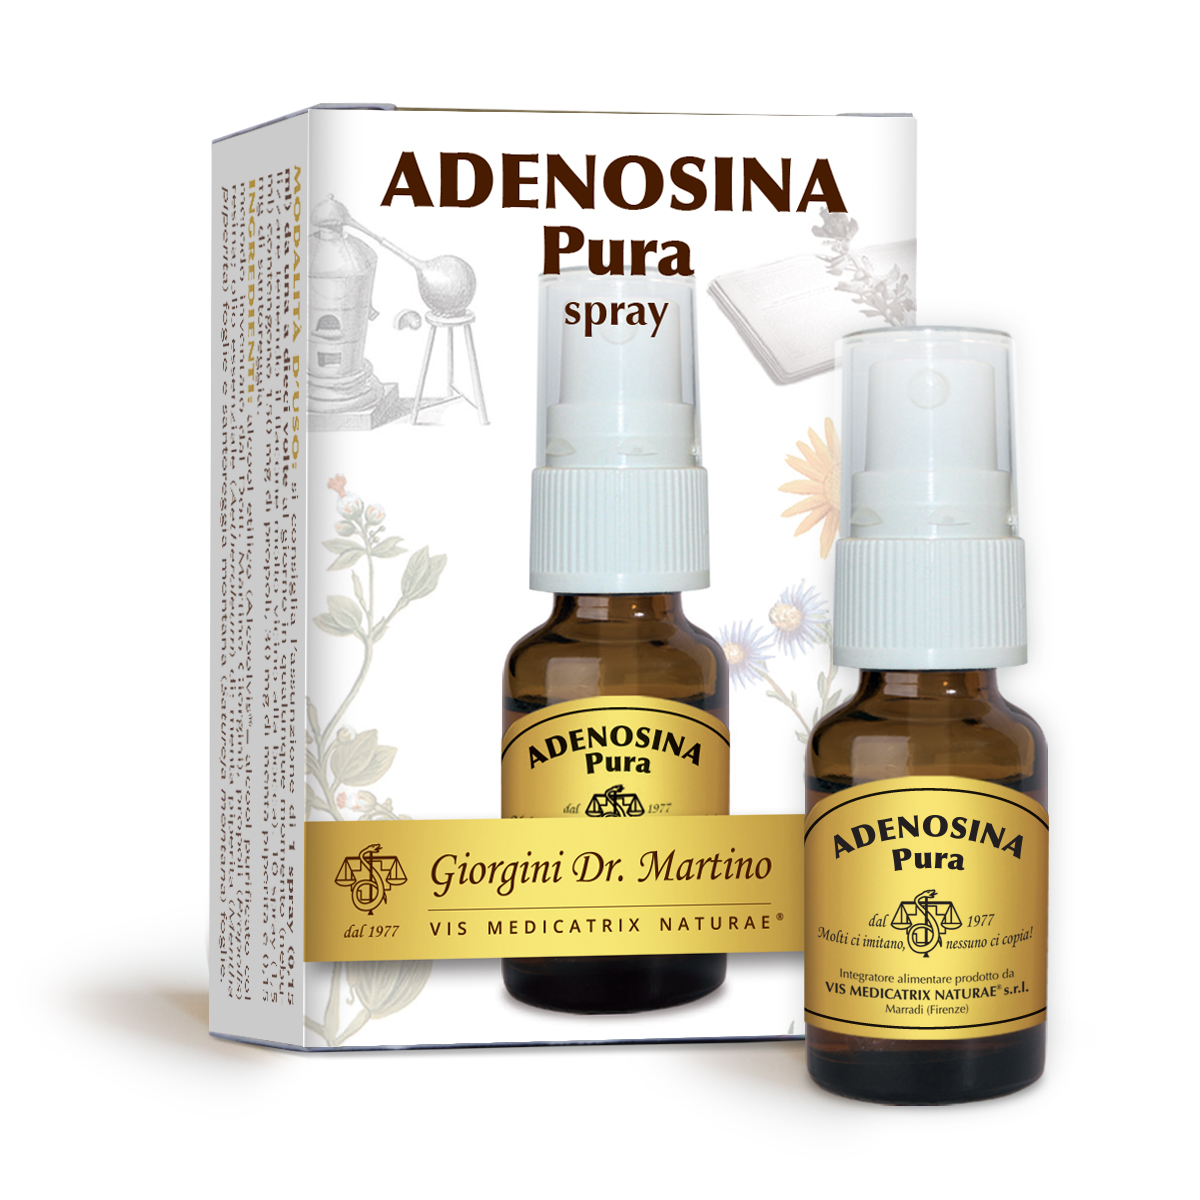 ADENOSINA Pura spray 15 ml